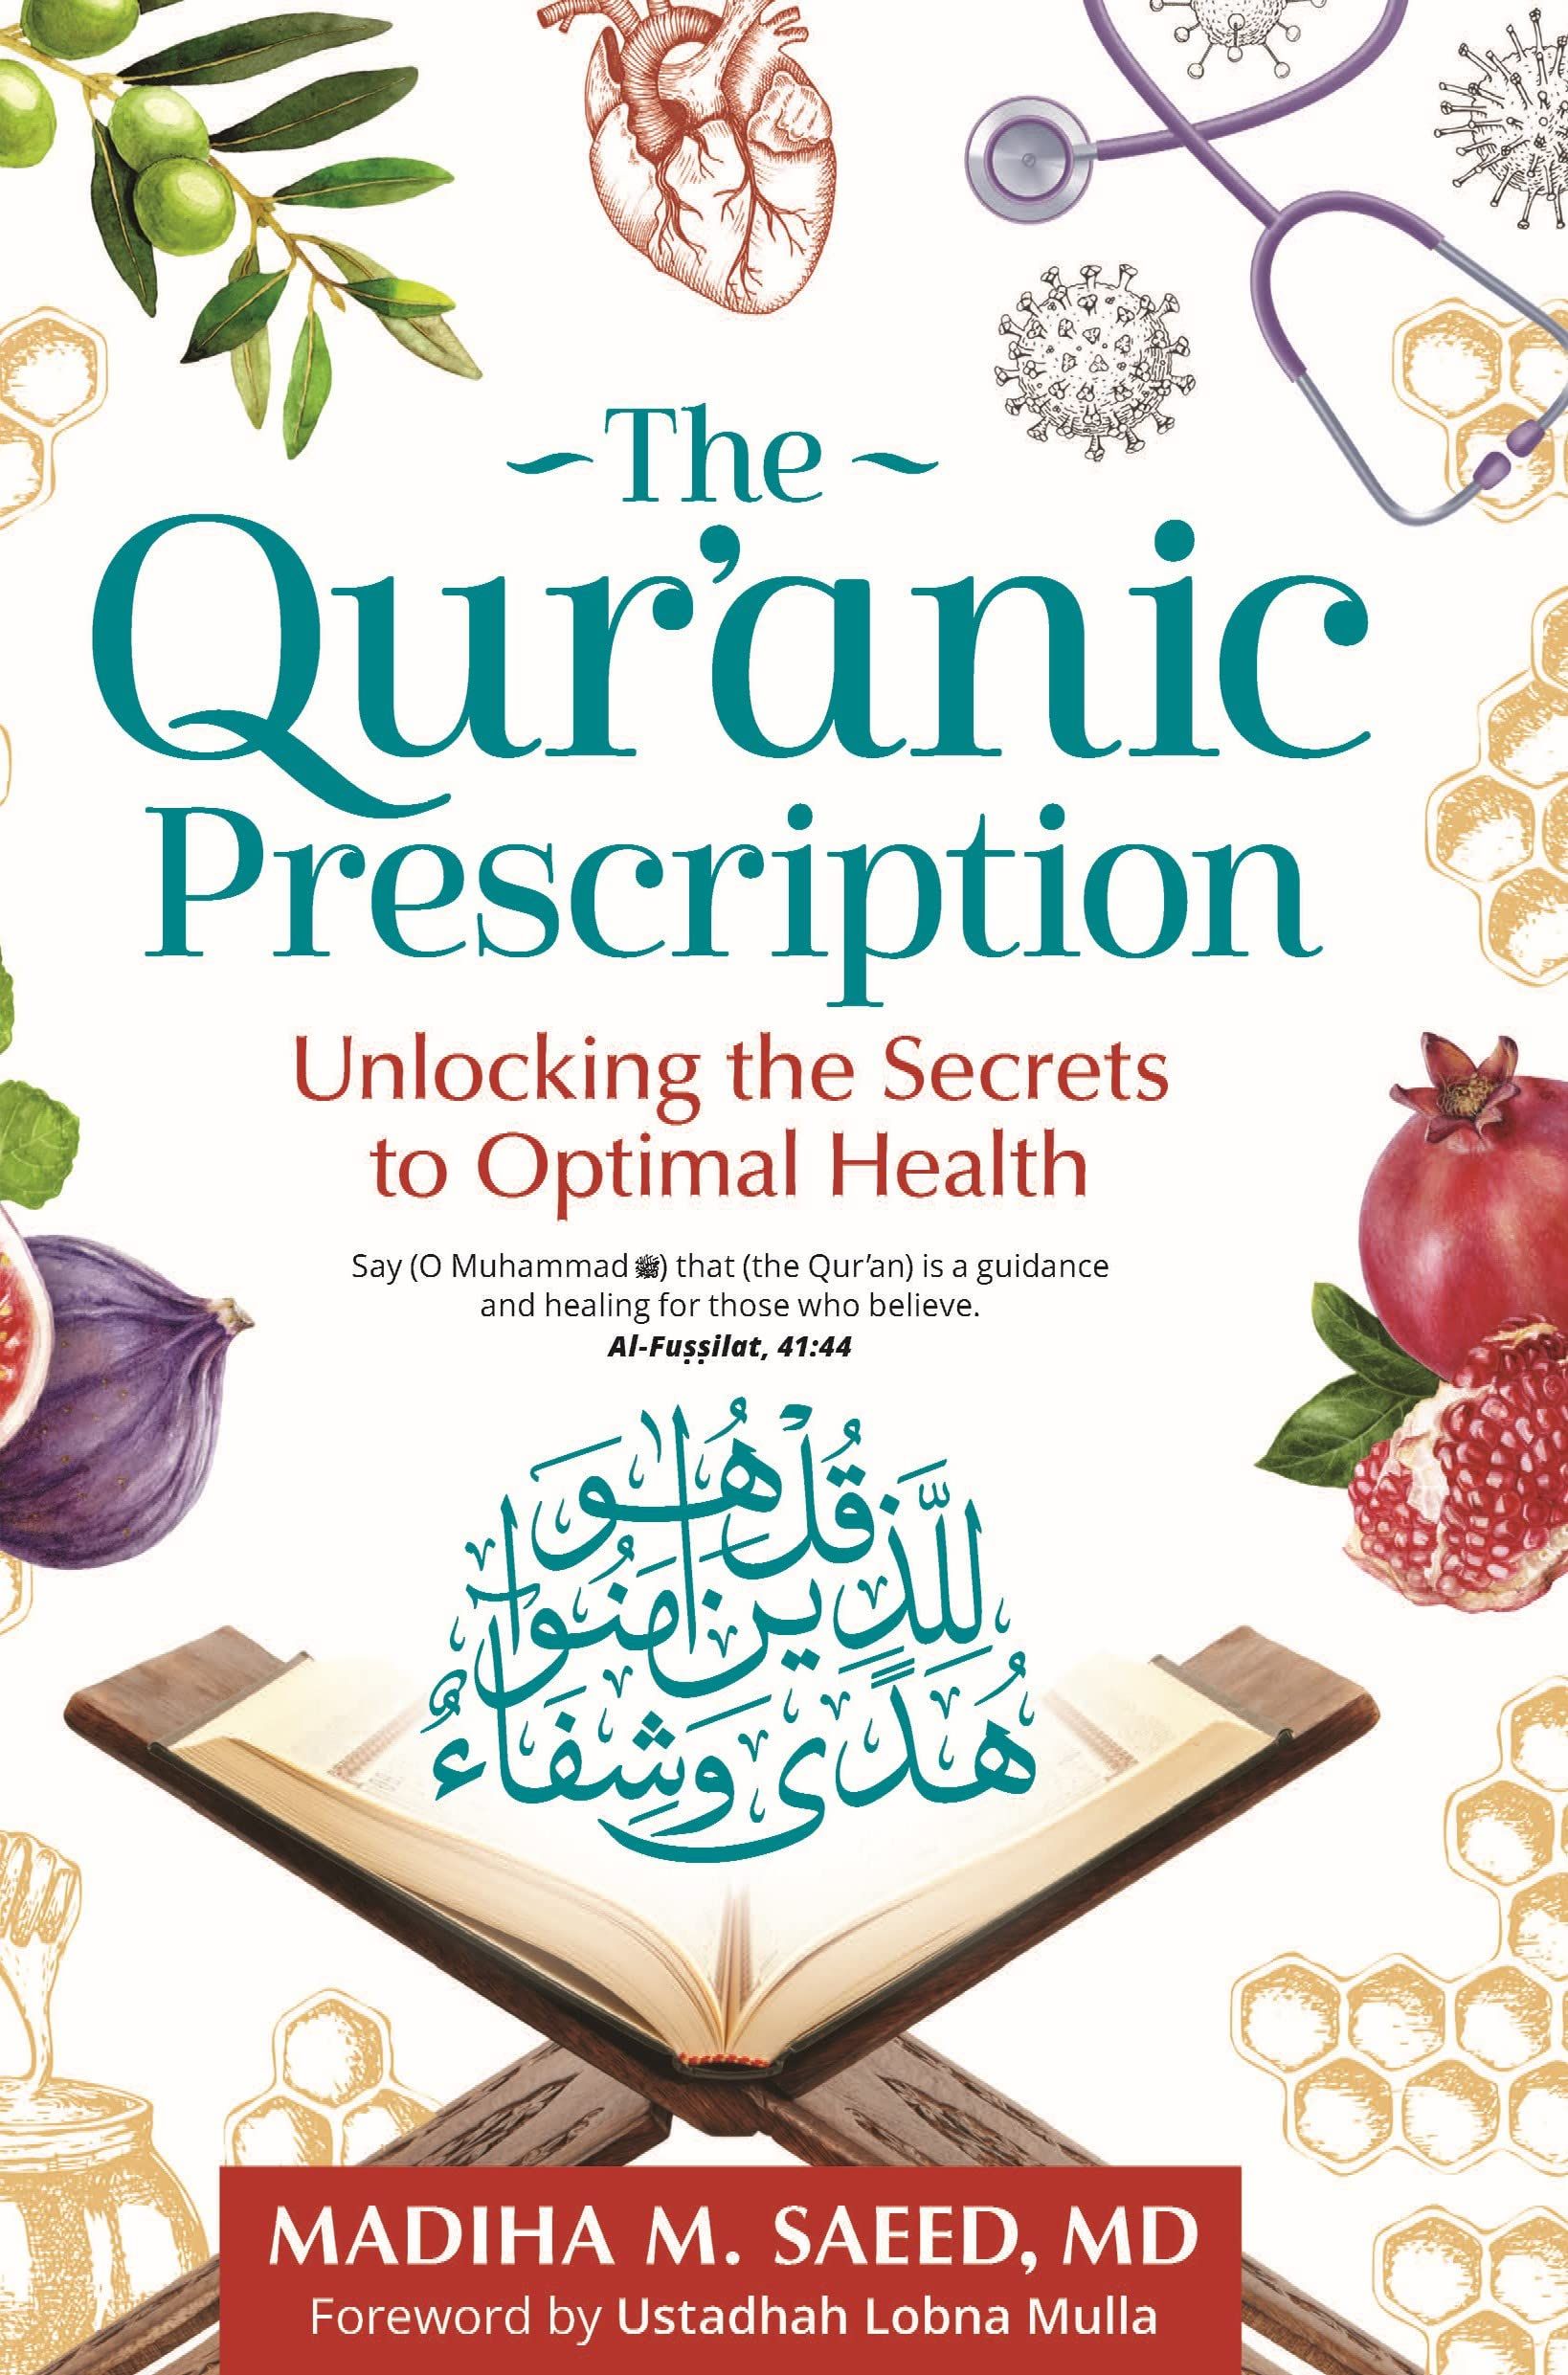 THE QURANIC PRESCRIPTION: UNLOCKING THE SECRETS OF OPTIMAL HEALTH